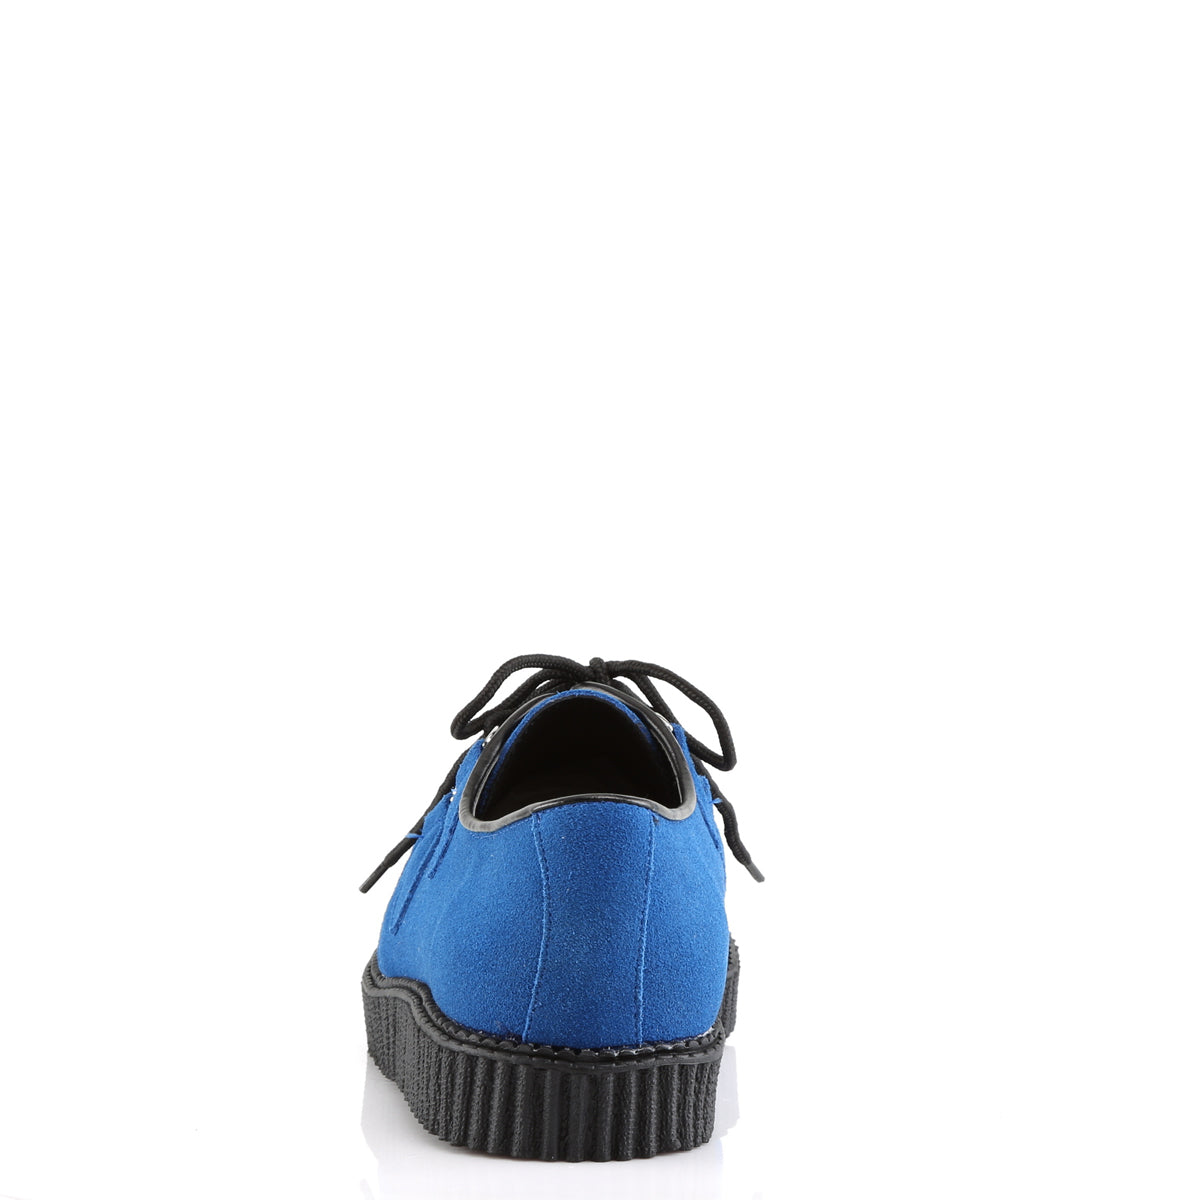 DemoniaCult Chaussure basse pour hommes Creeper-602S Suede bleu royal